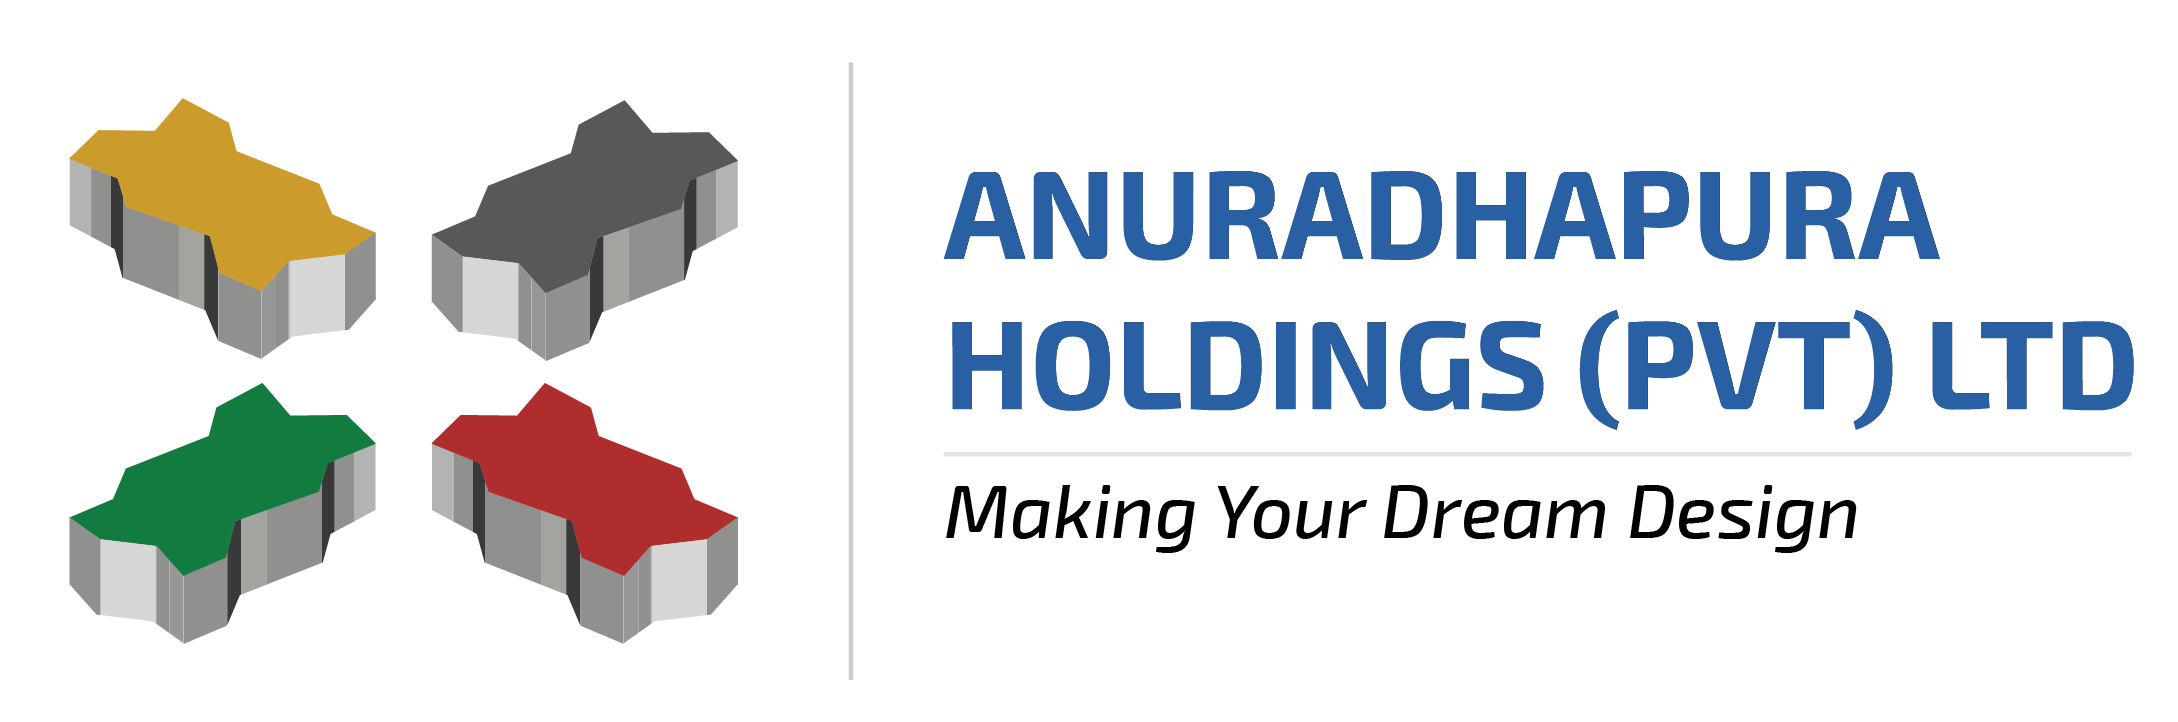 Anuradhapura Holdings